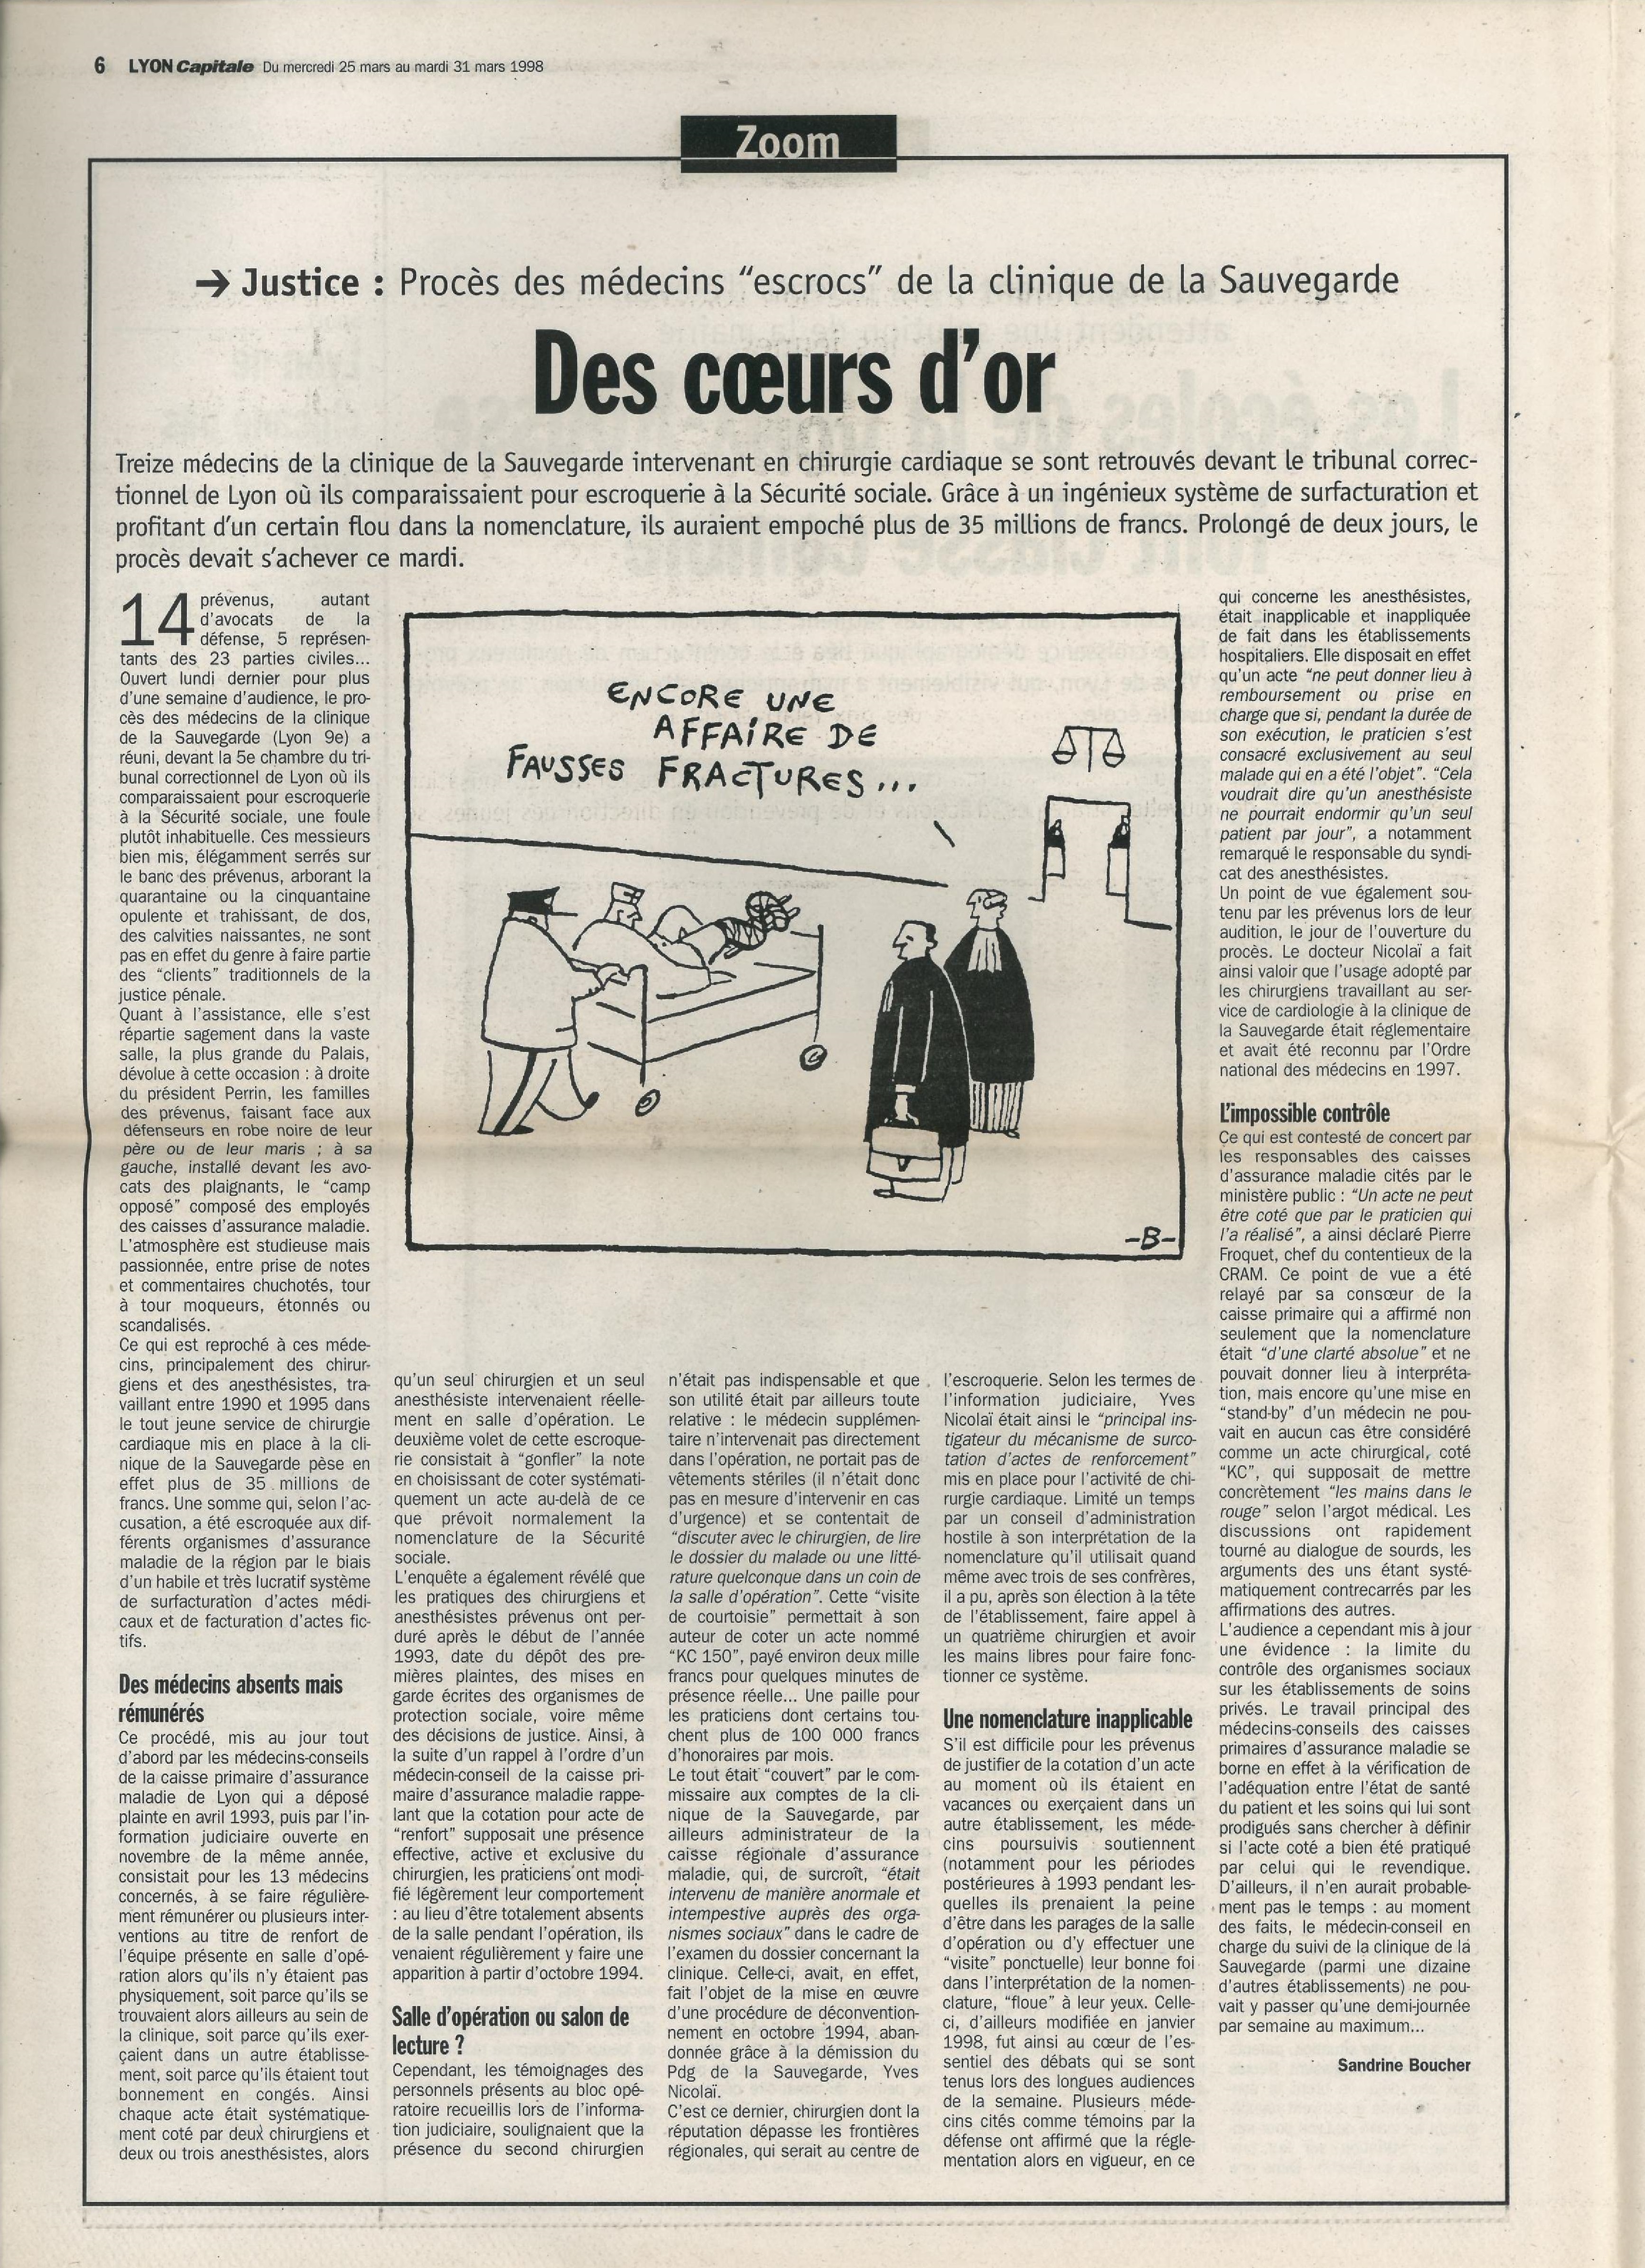 Lyon Capitale n°164, 25 mars 1998, p. 6 © Lyon Capitale